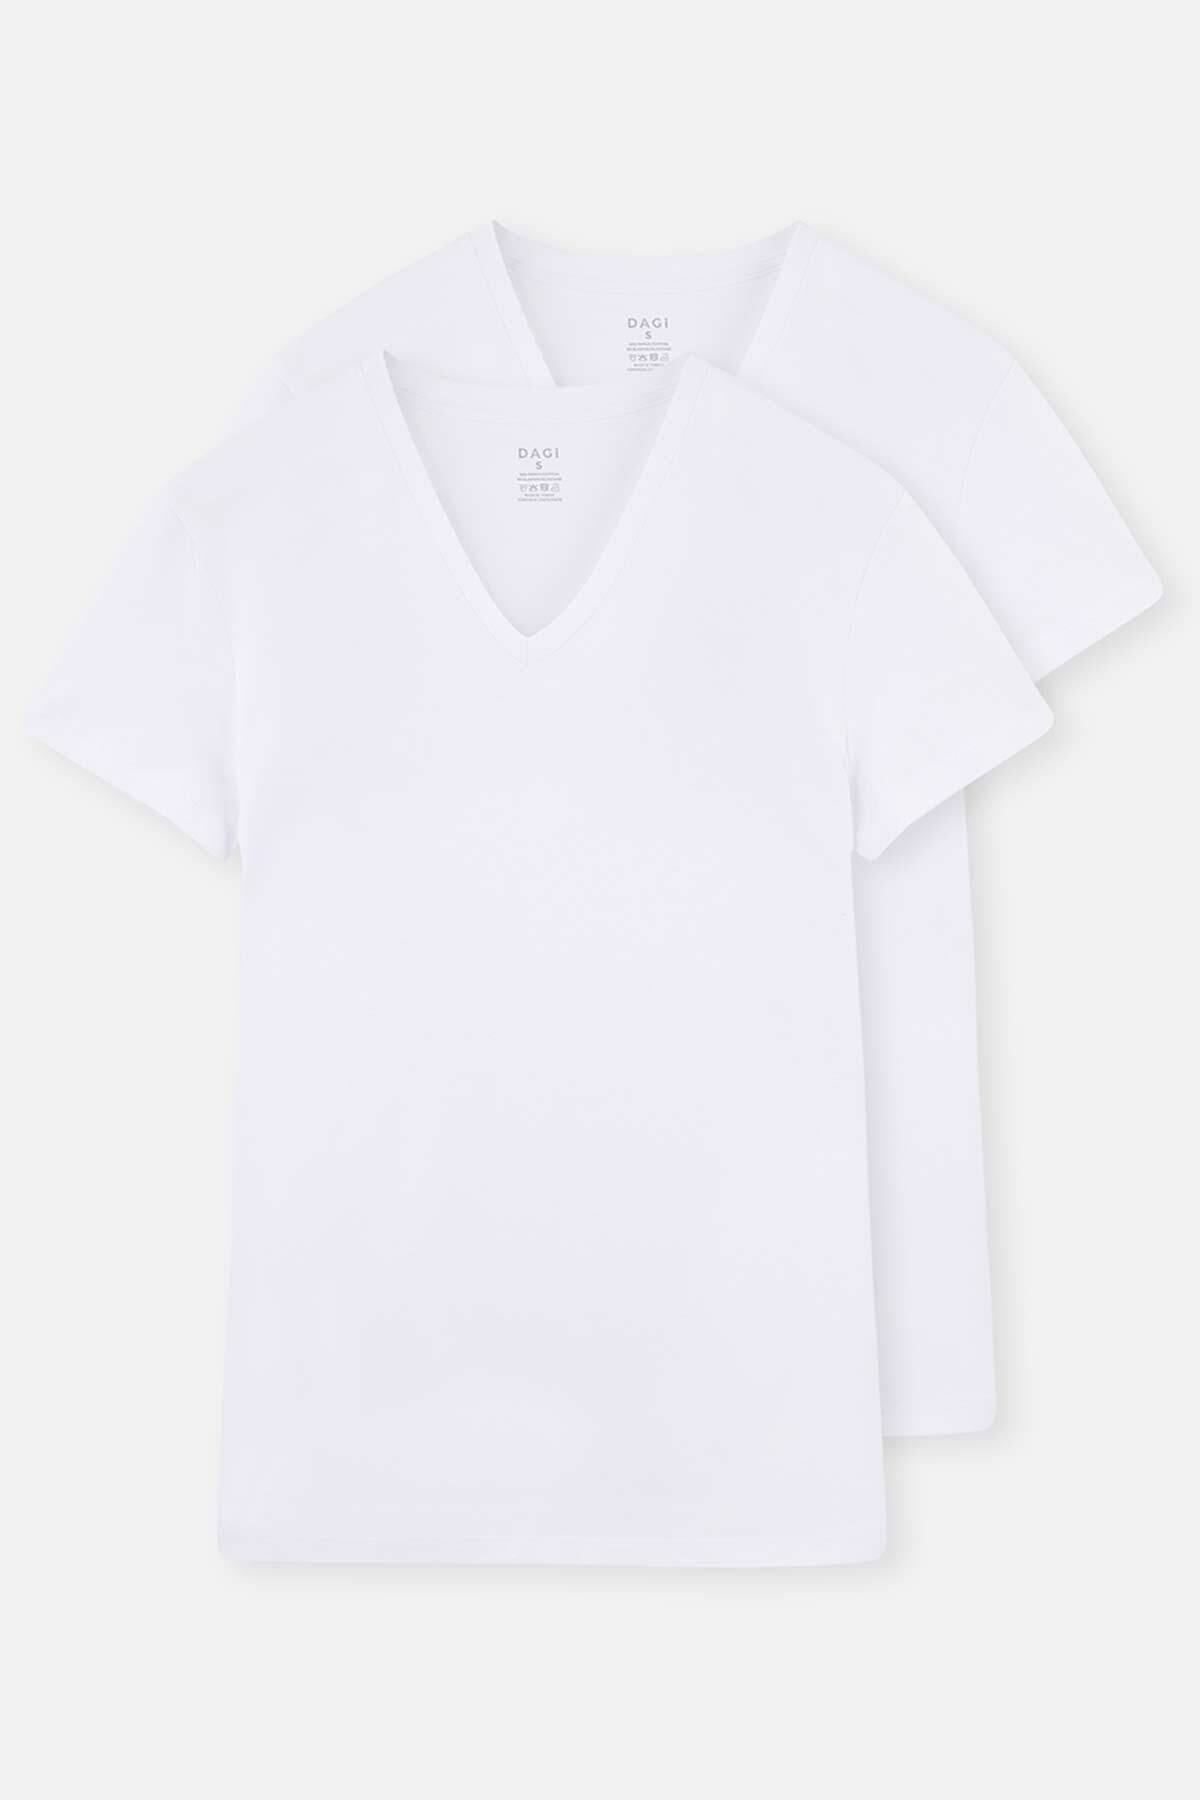 Dagi Beyaz Compact V Yaka 2'li Fanila T-shirt